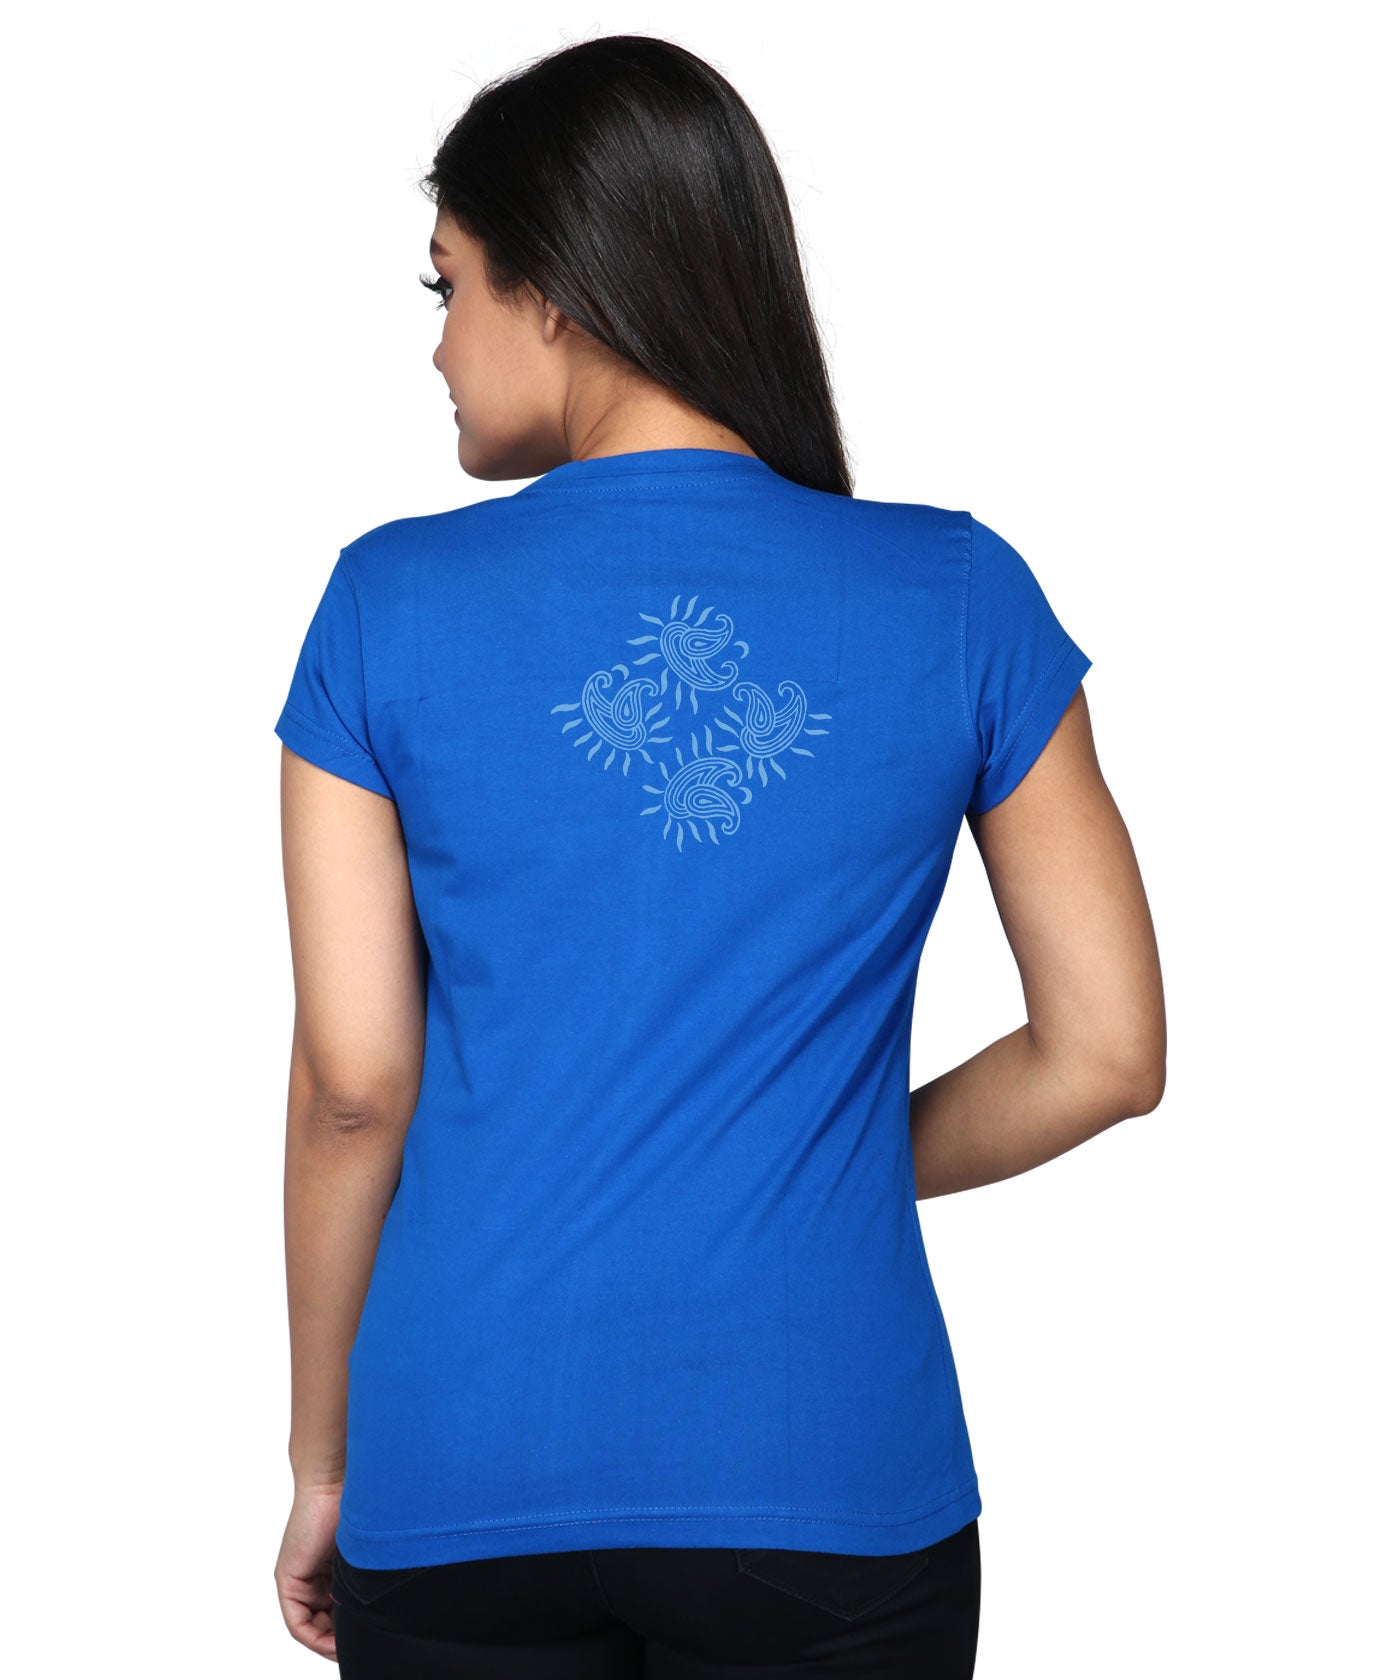 Cross Border - Block Print Tees for Women - Electric Blue